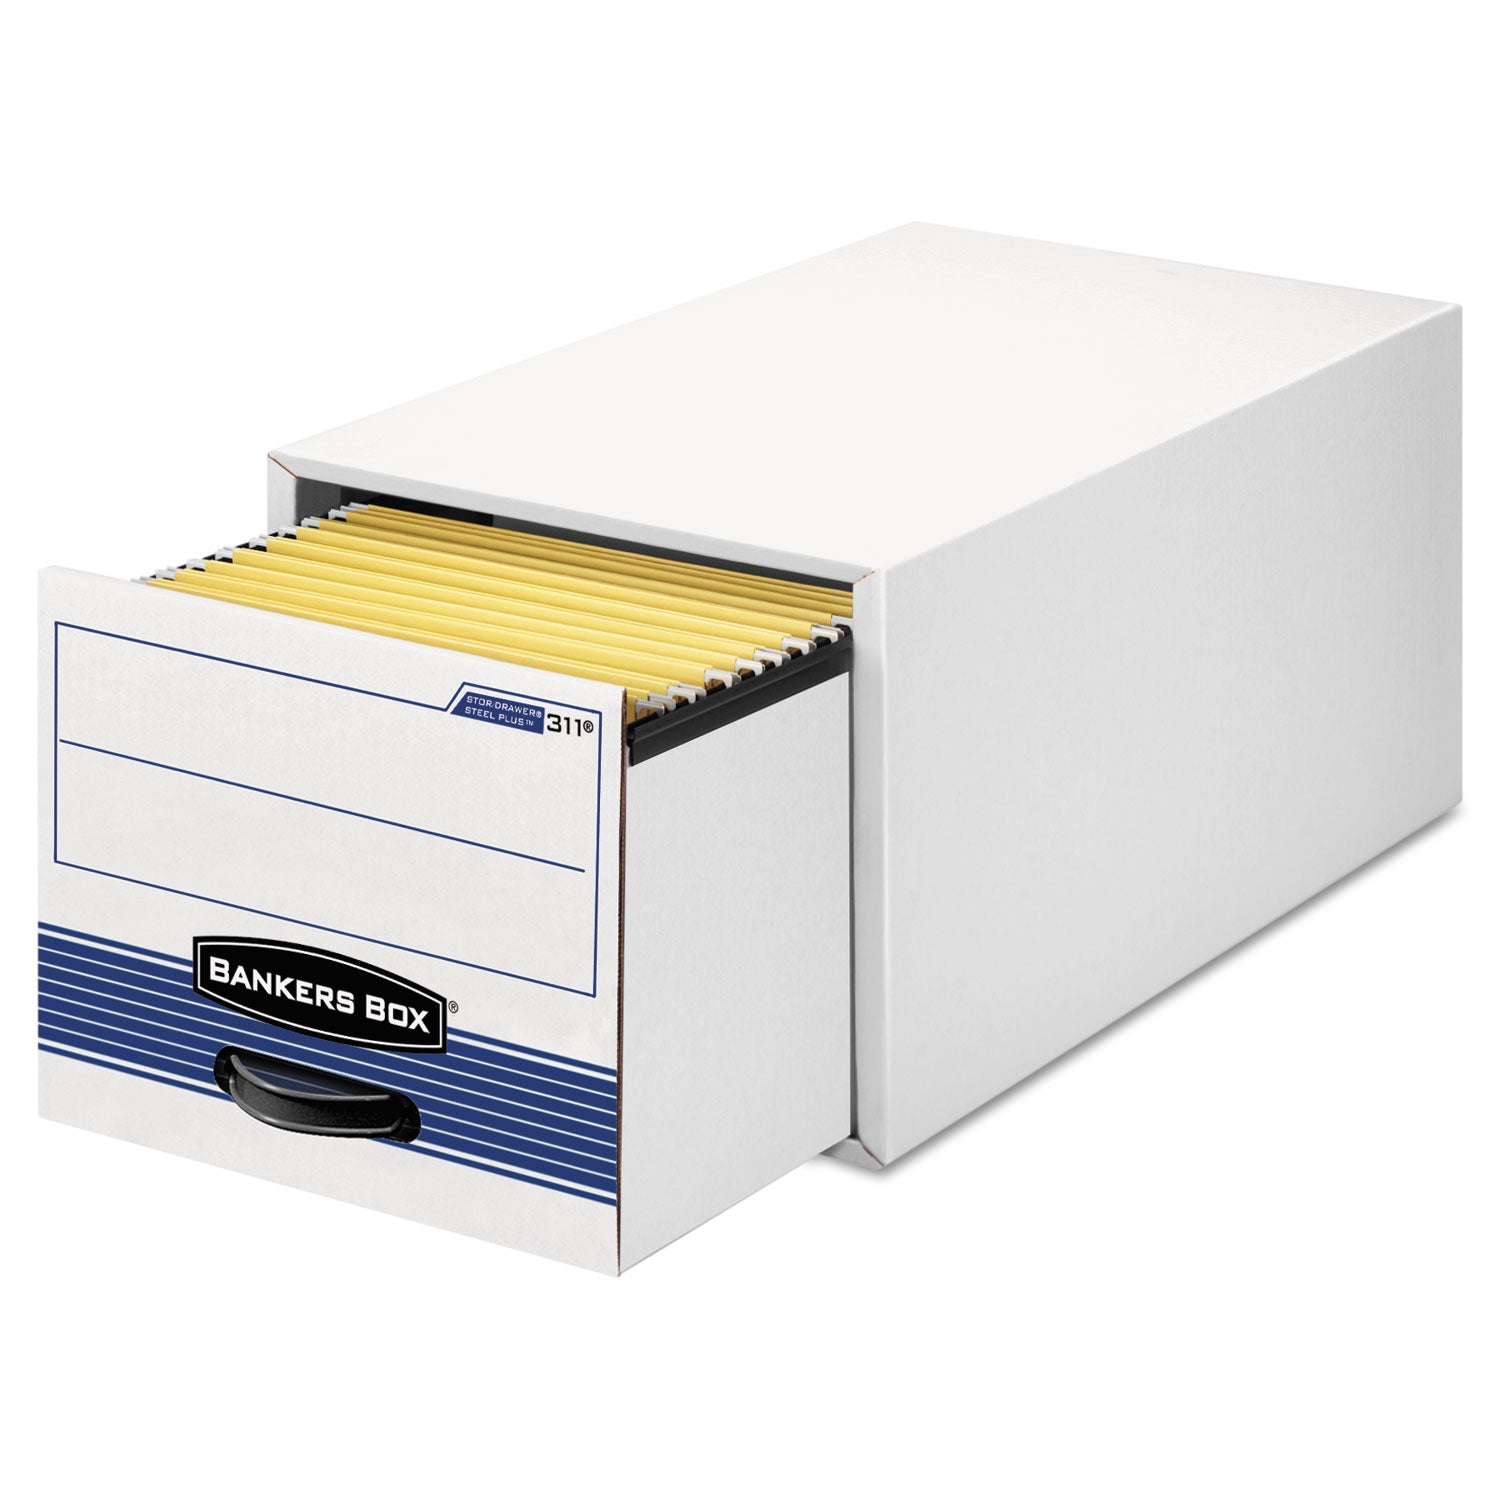 STOR/DRAWER STEEL PLUS Extra Space-Savings Storage Drawers, Legal Files, 17" x 25.5" x 11.5", White/Blue, 6/Carton - 